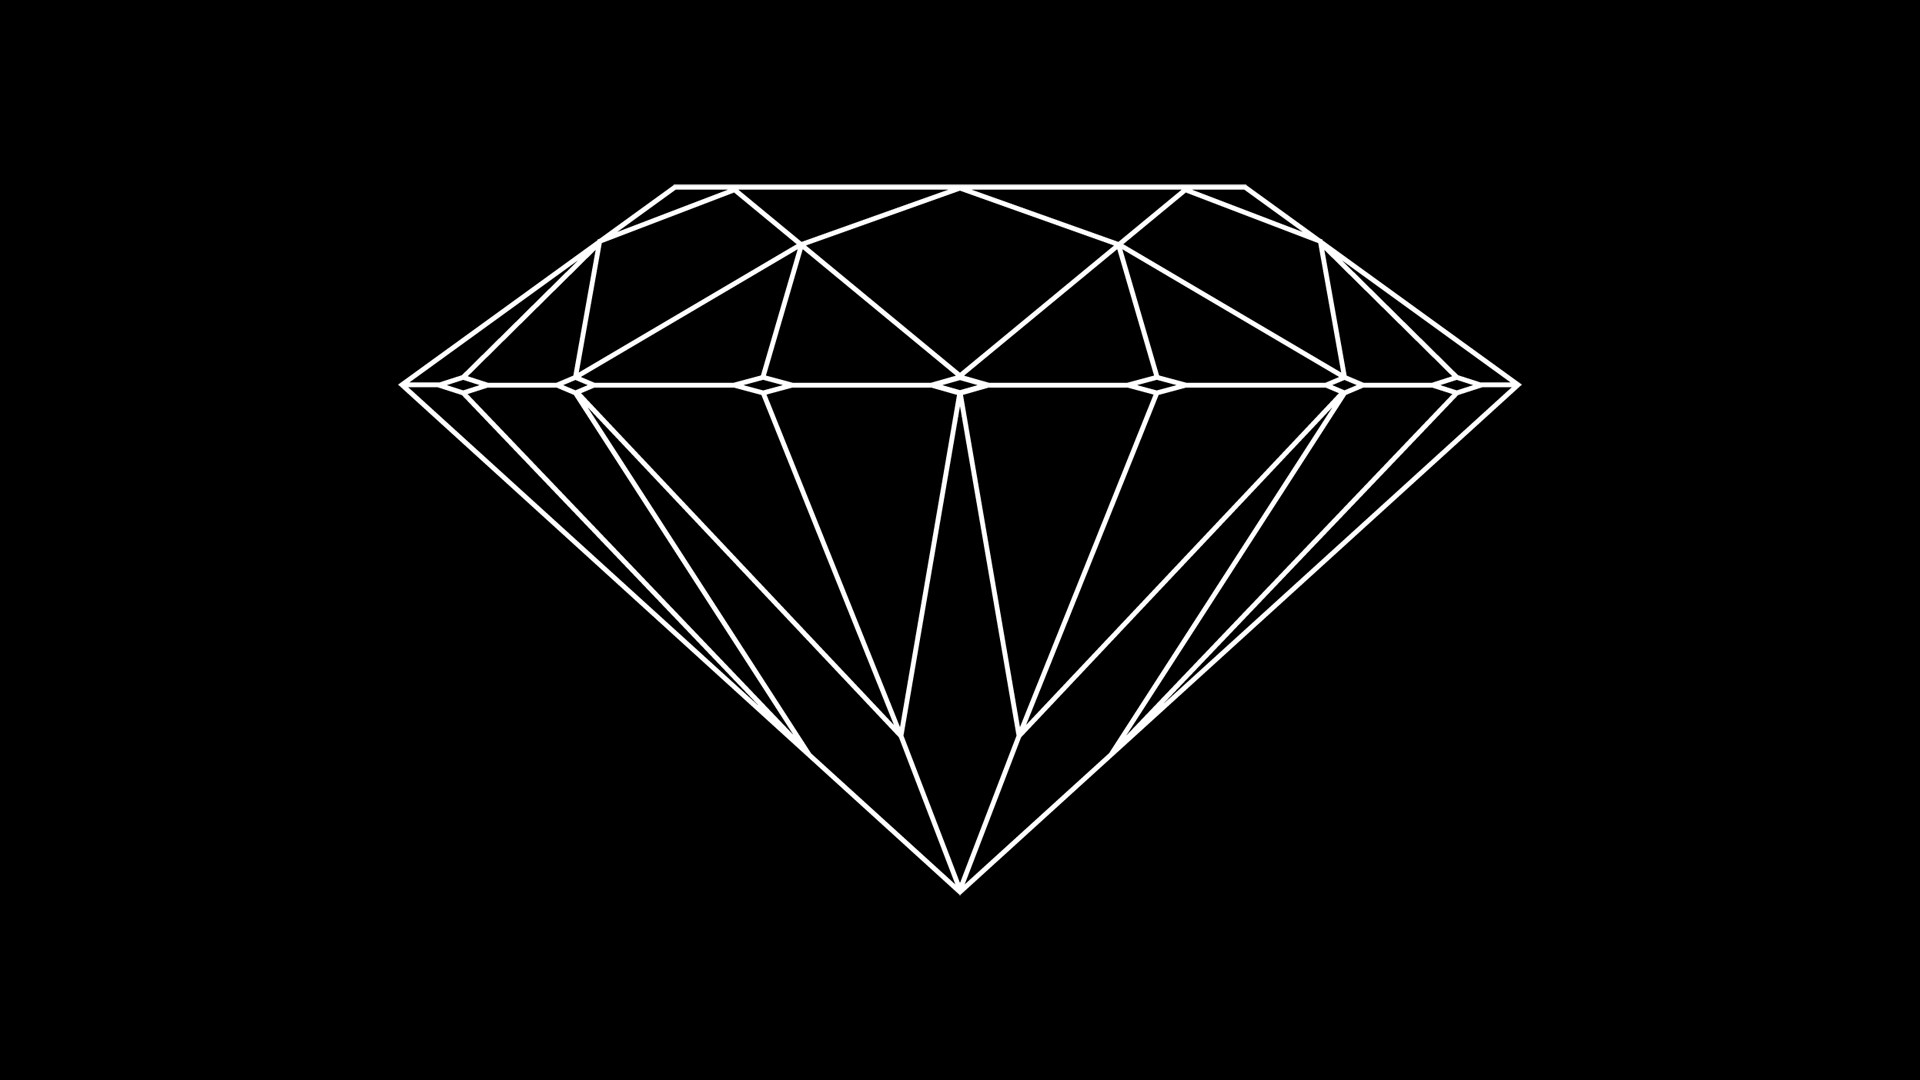 1920x1080 17 Best ideas about Diamond Wallpaper on Pinterest | Black